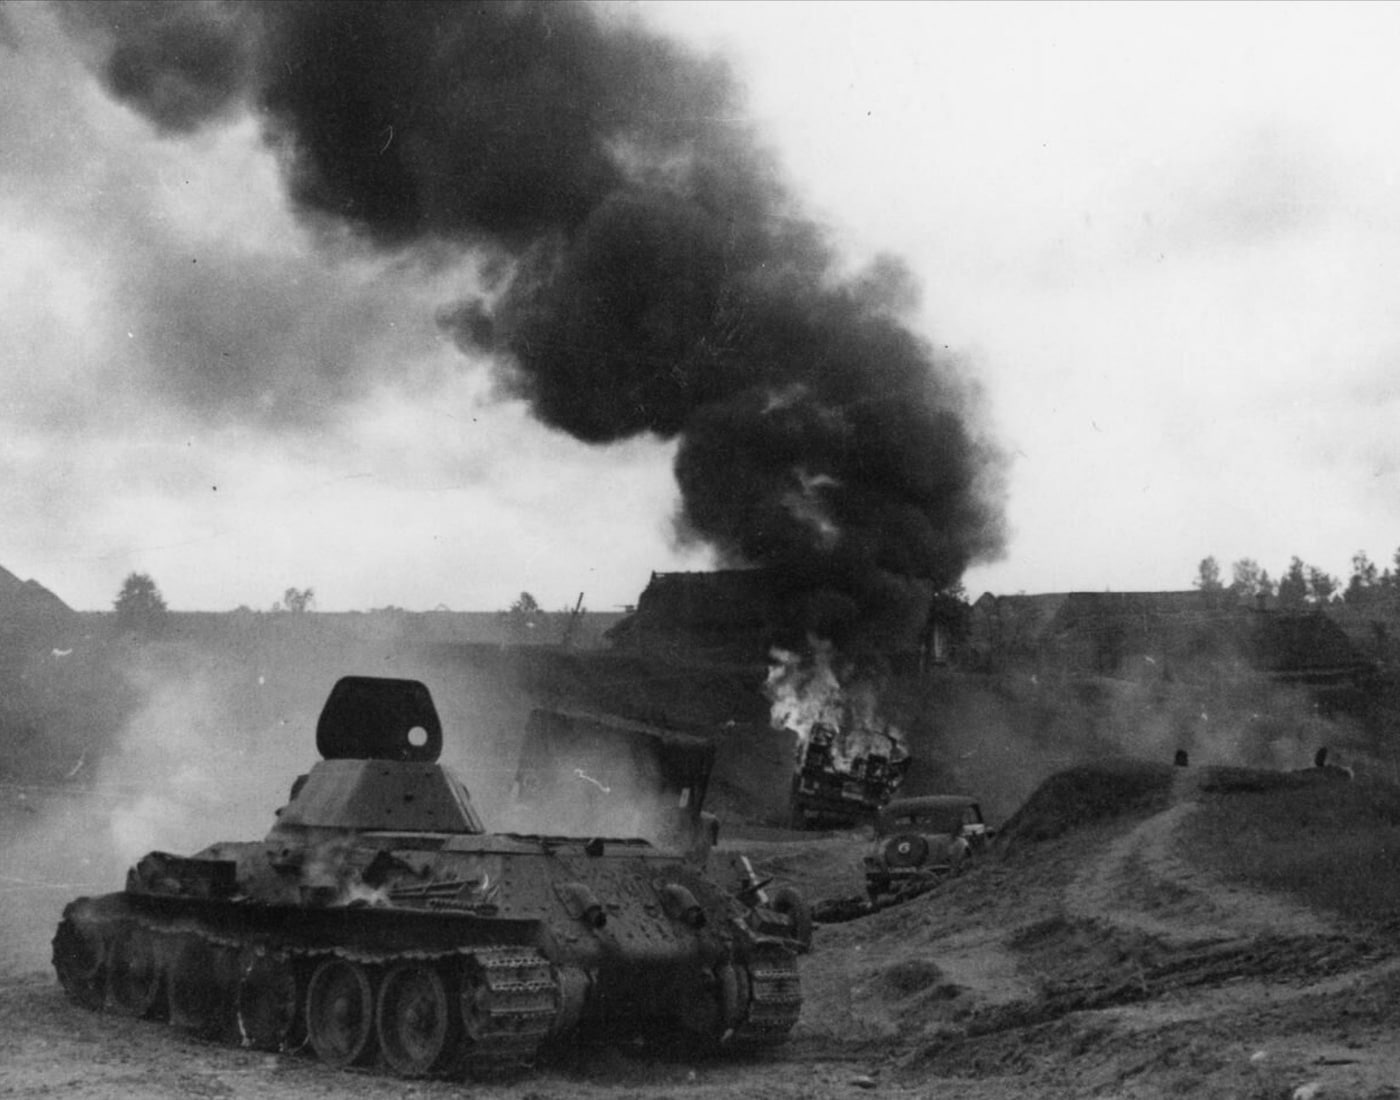 burning t-34 tank in wwii